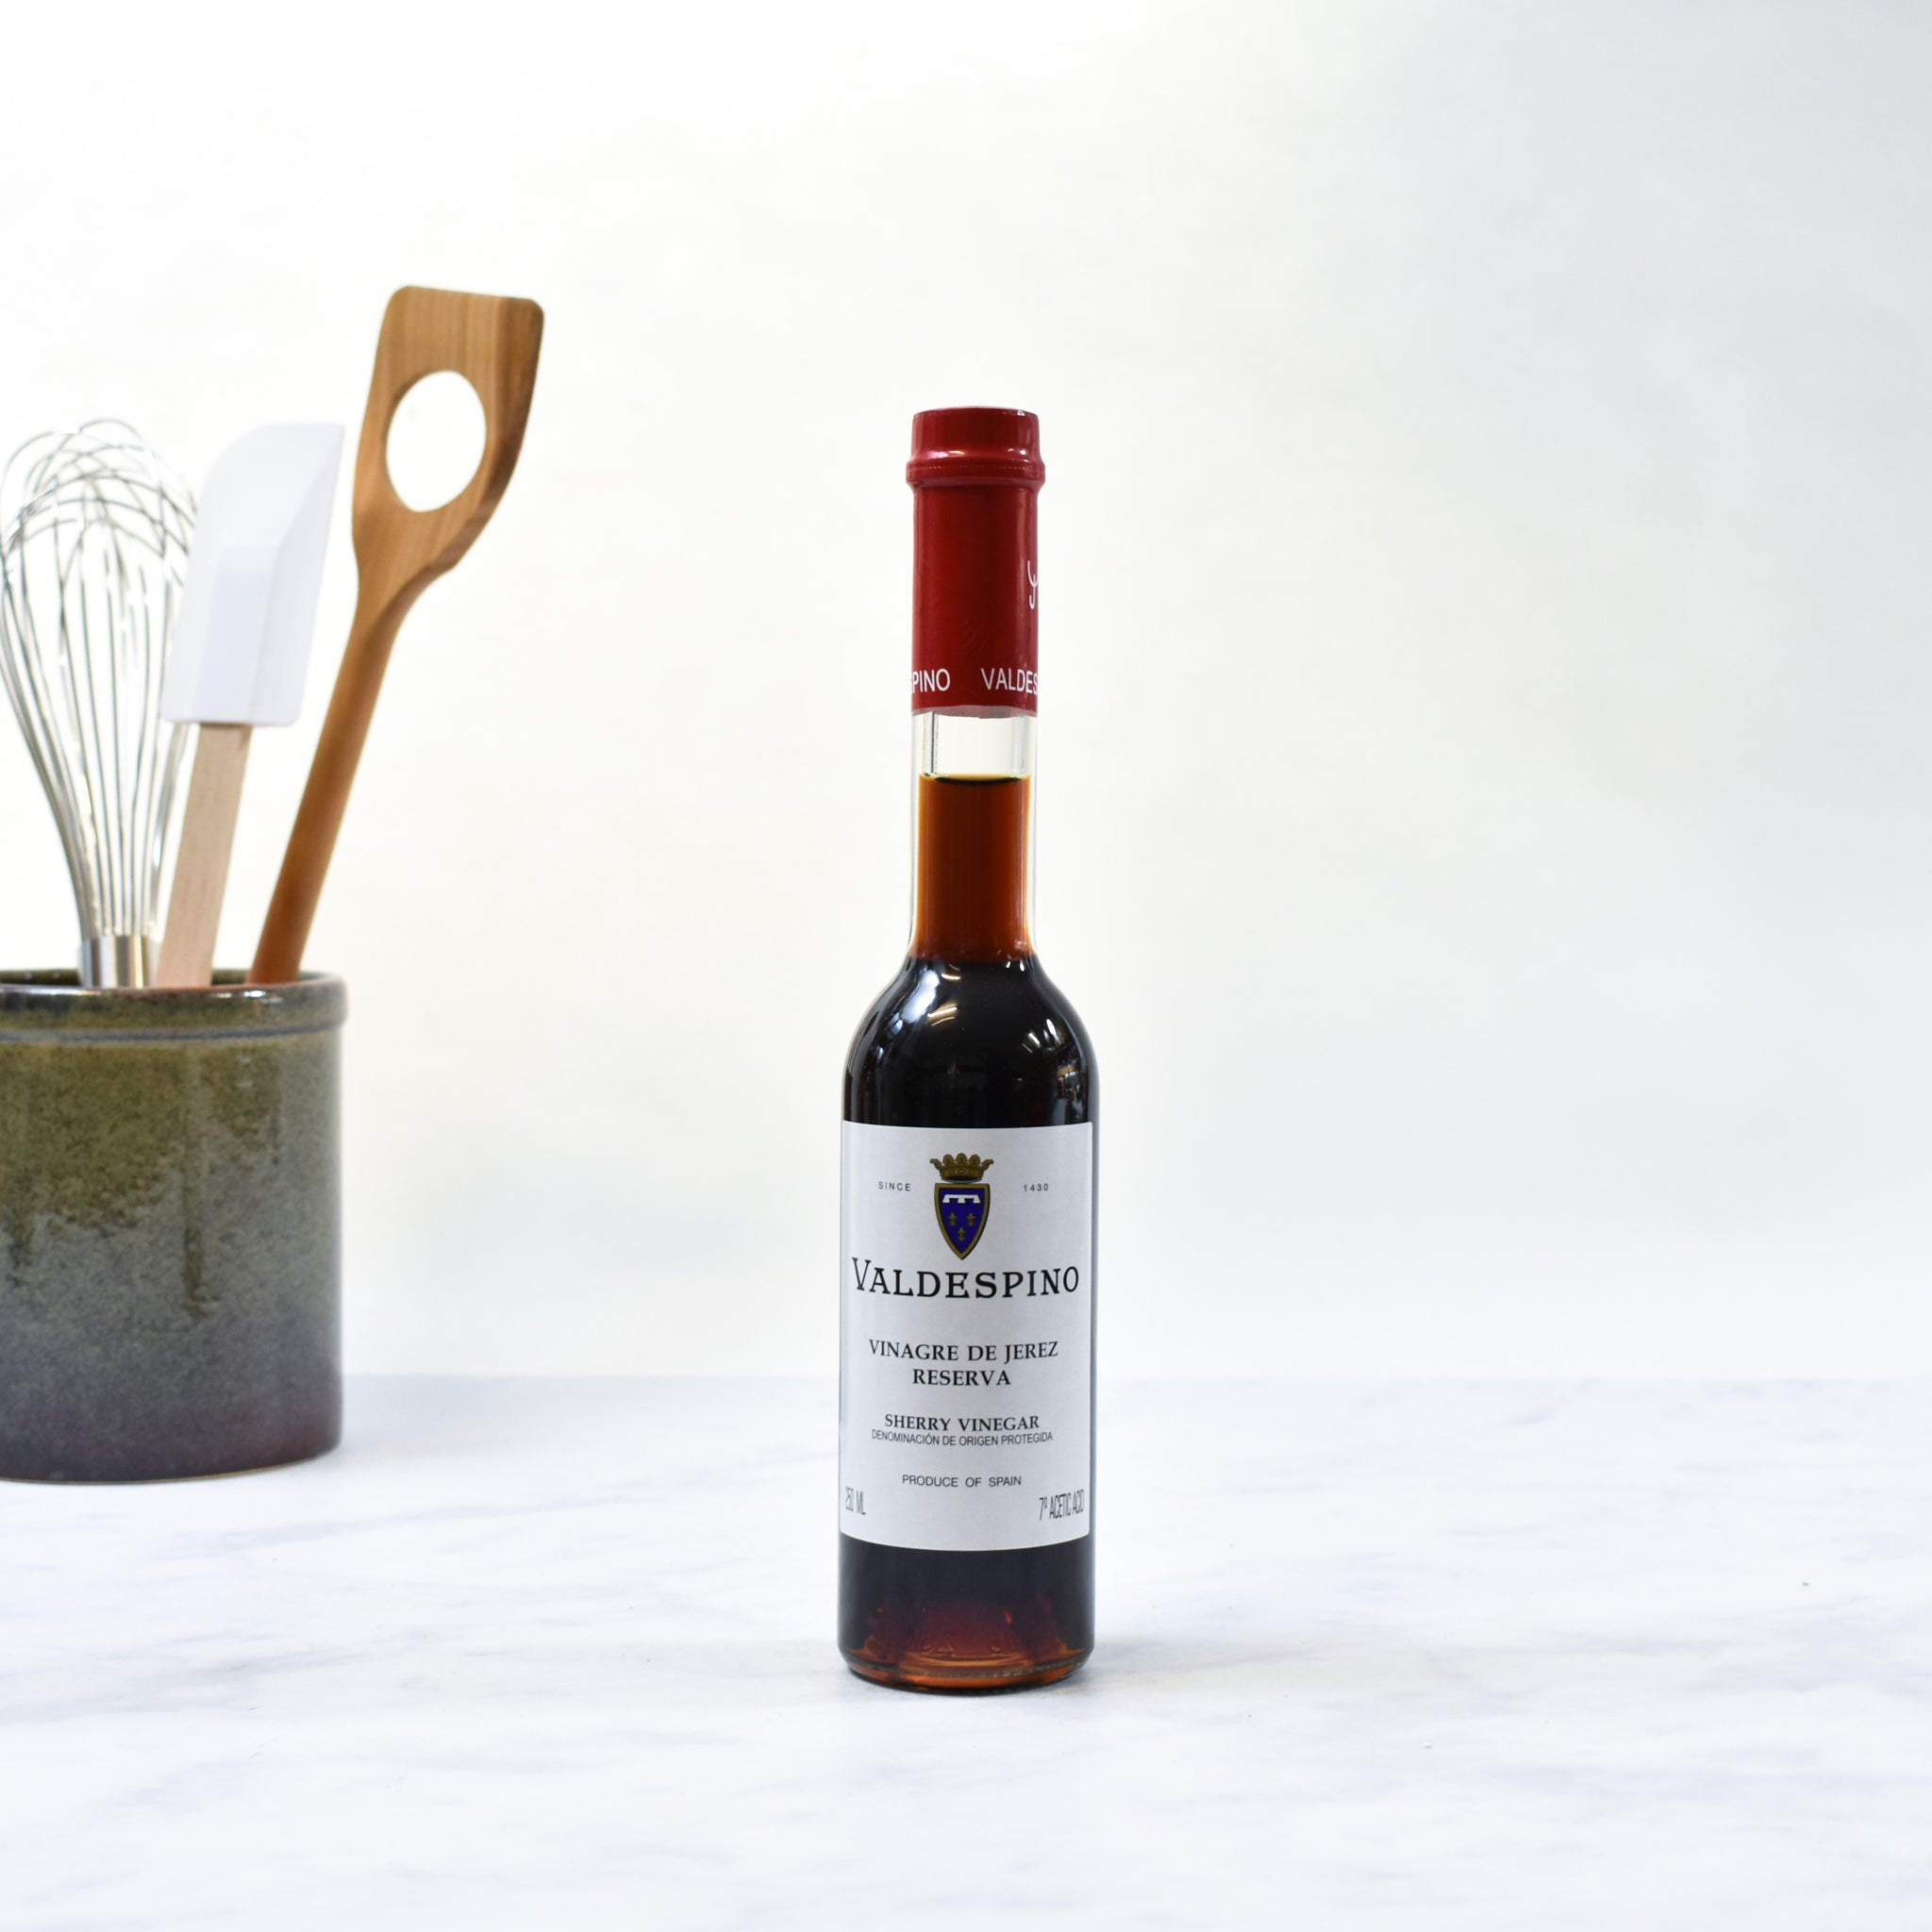 Valdespino Cask-Aged Sherry Vinegar DOP 250ml Ingredients Oils & Vinegars Spanish Food Lifestyle Packaging Shot